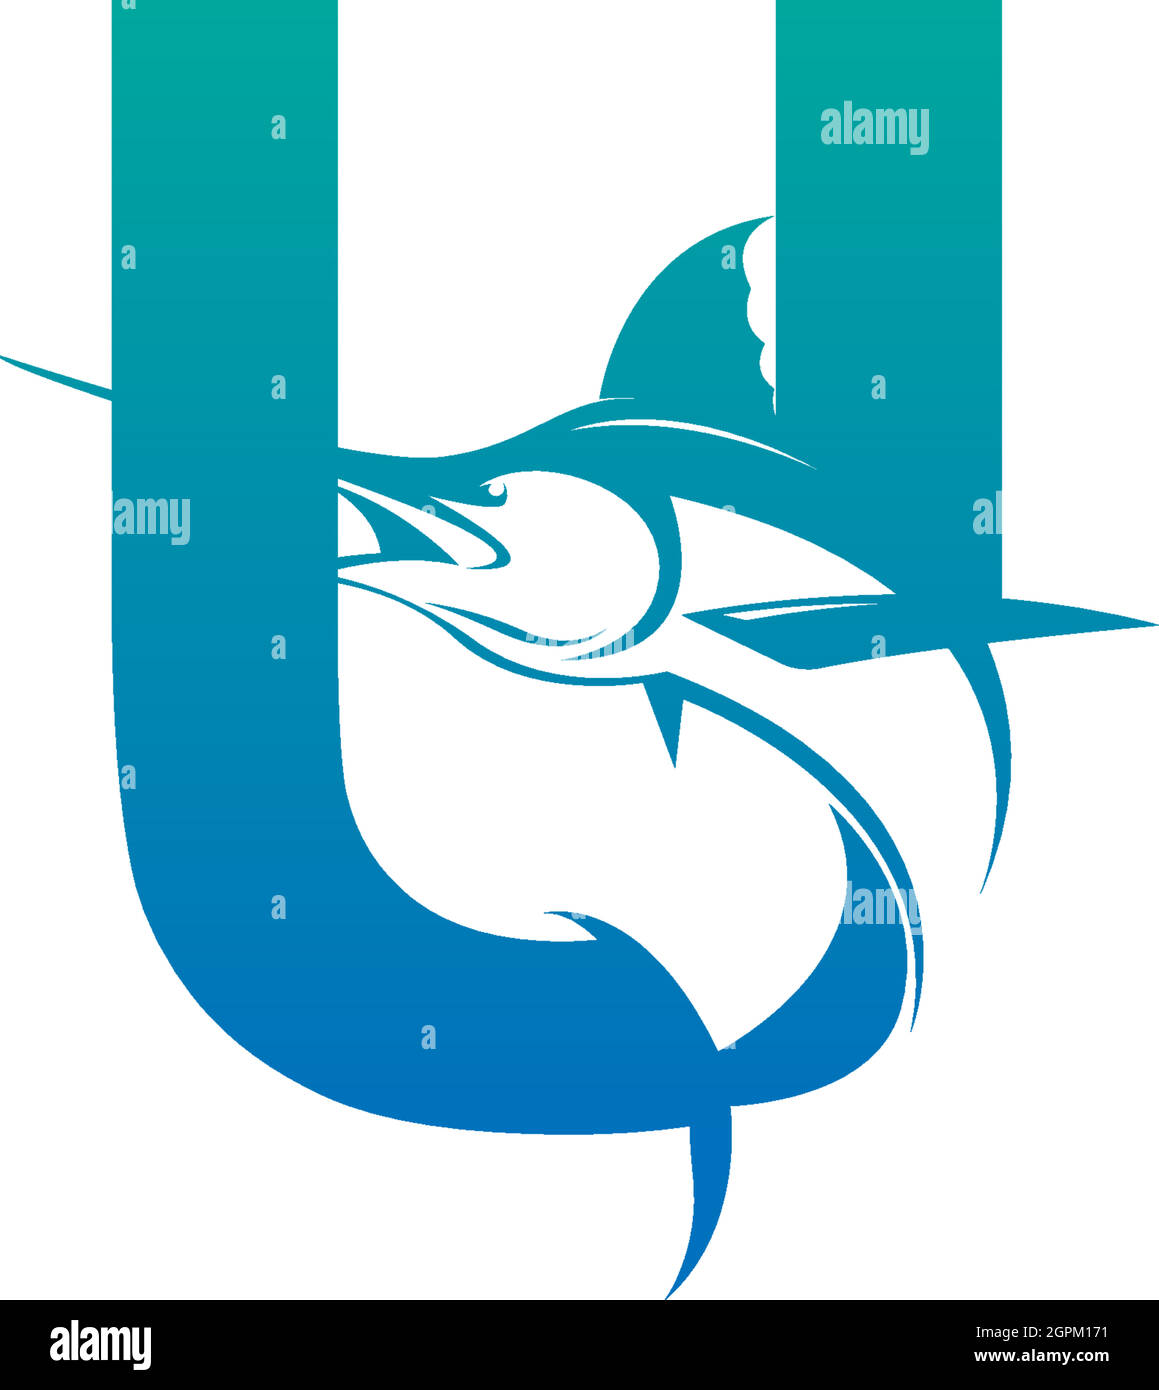 Letter U logo icon with fish design symbol template Stock Vector